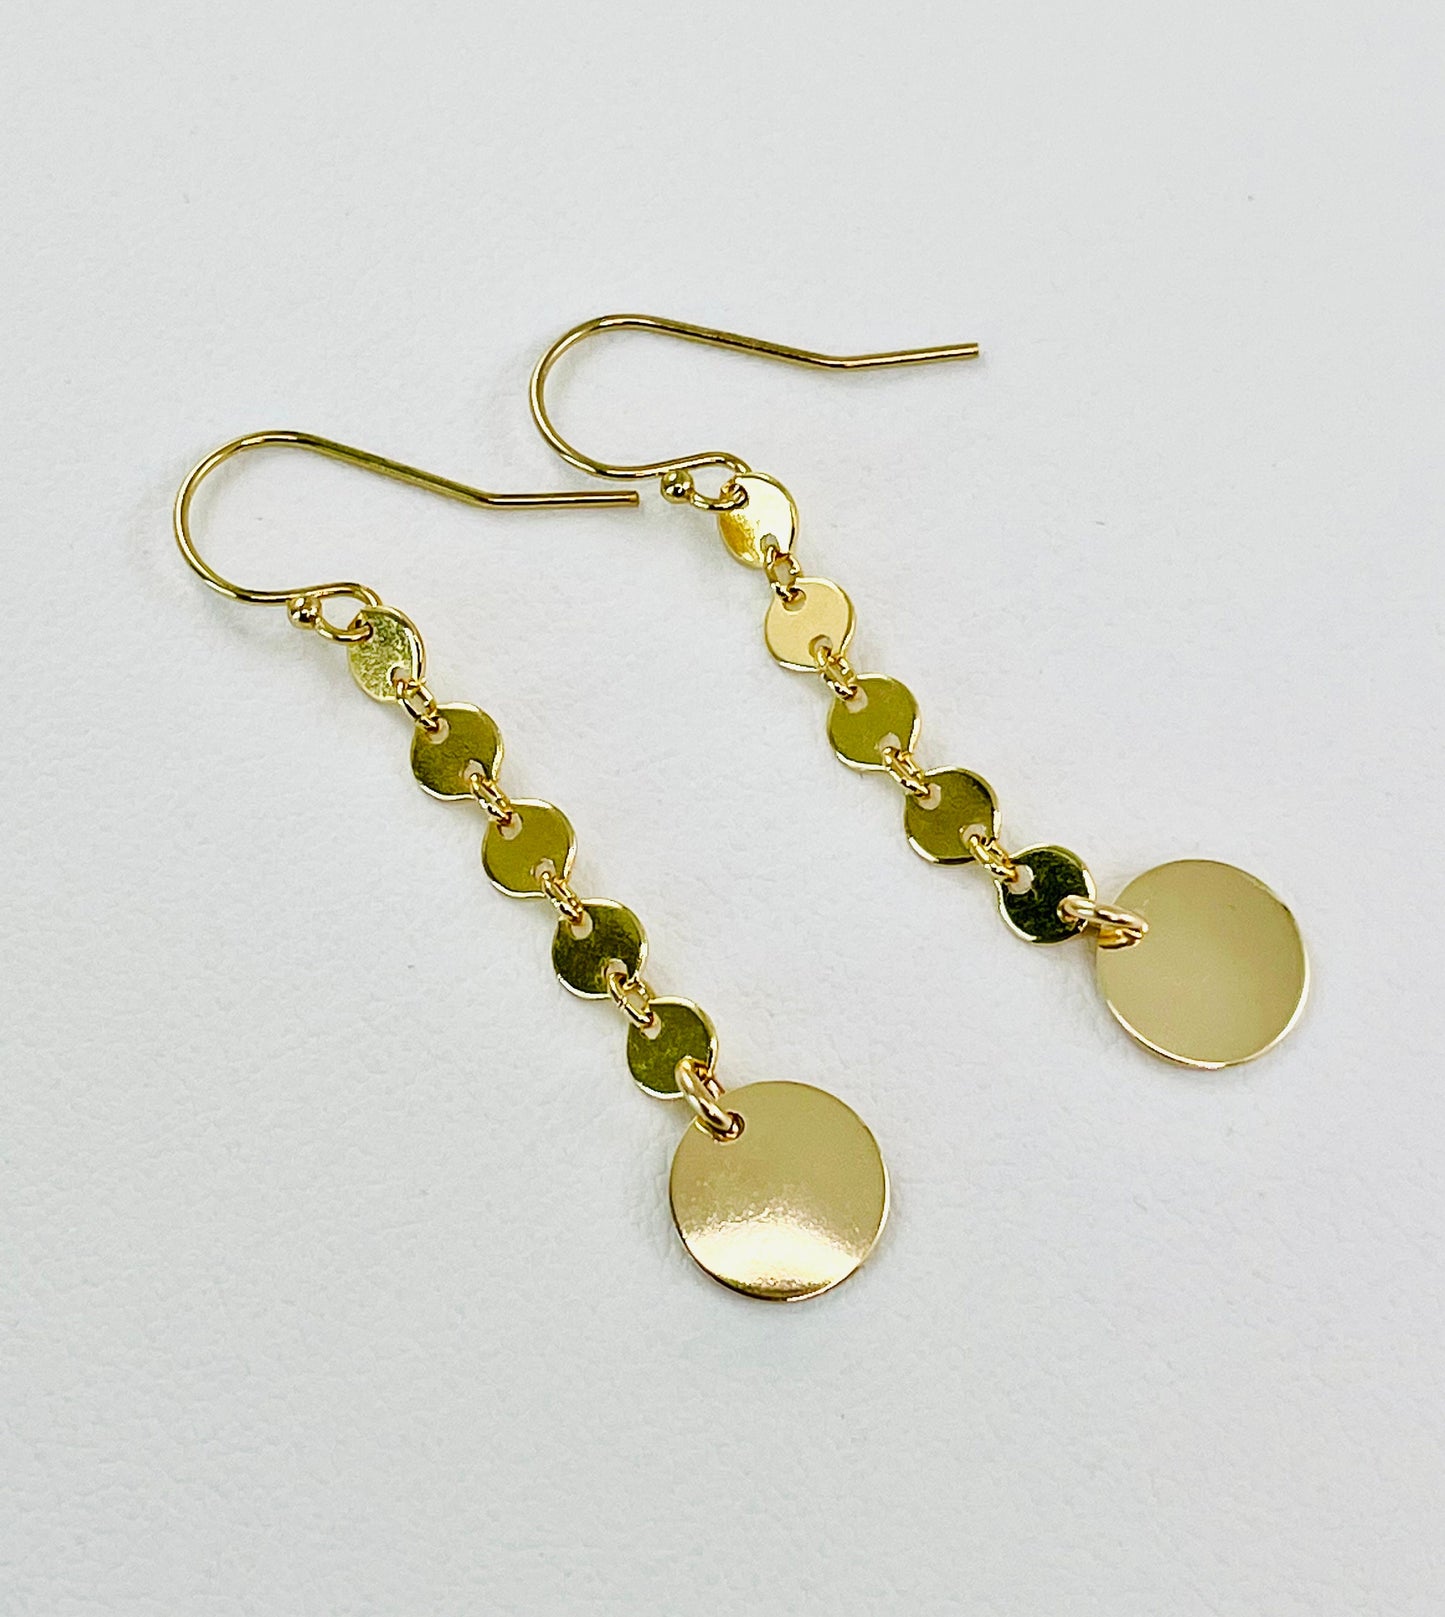 Gold Sequin Chain Earrings,Gold Chain Earrings,Golden Chain Disc Earrings,Small Gold Circle Earrings,Connected circle earrings,Disk Dangle